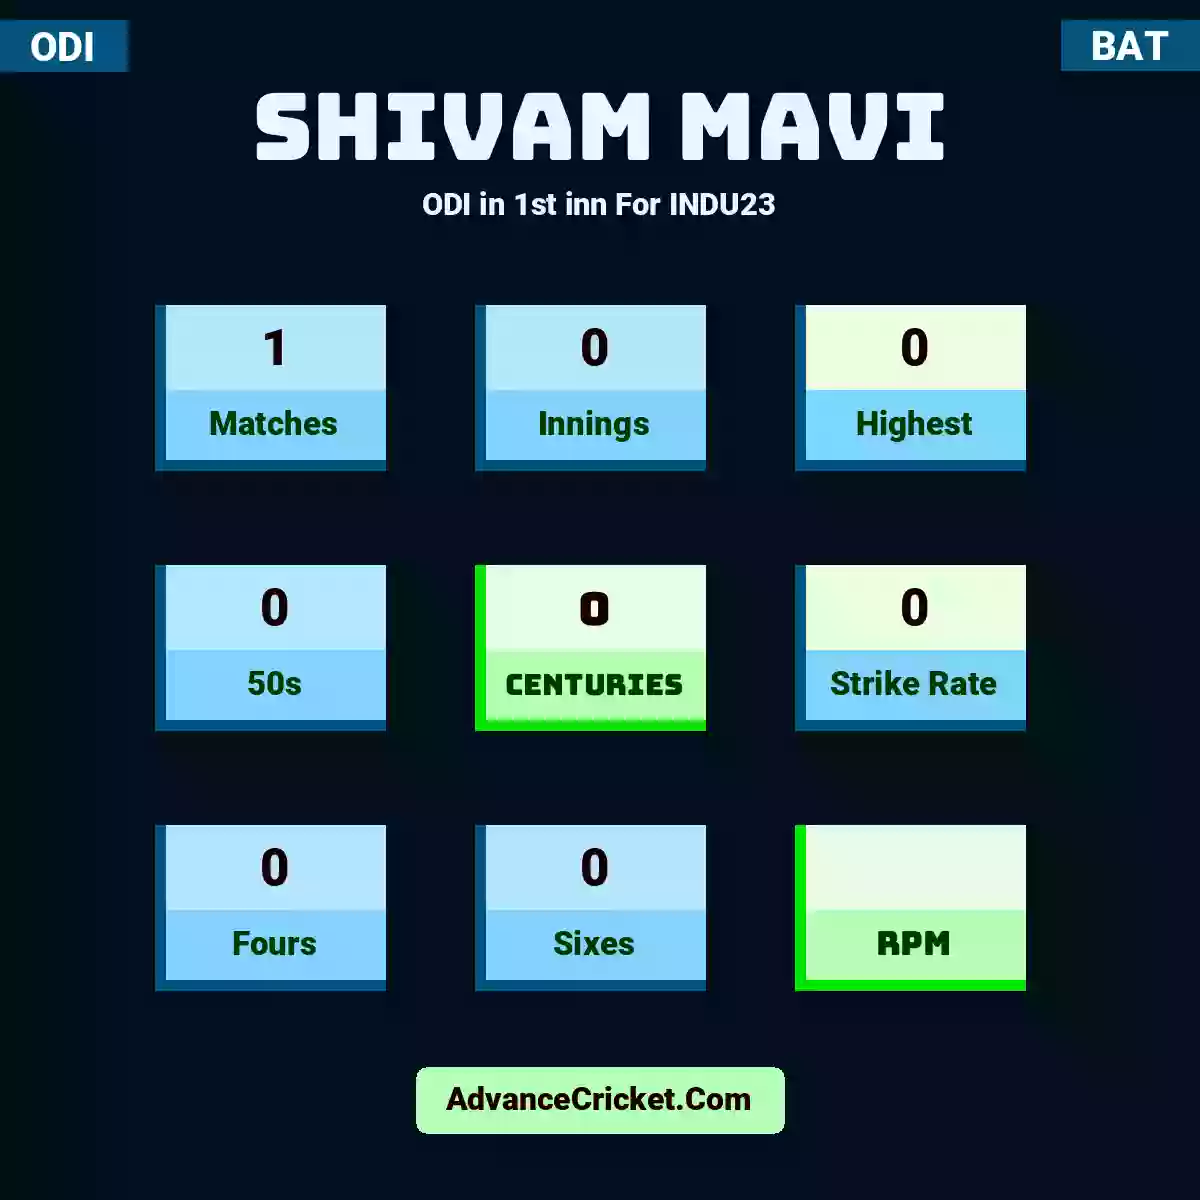 Shivam Mavi ODI  in 1st inn For INDU23, Shivam Mavi played 1 matches, scored 0 runs as highest, 0 half-centuries, and 0 centuries, with a strike rate of 0. S.Mavi hit 0 fours and 0 sixes.